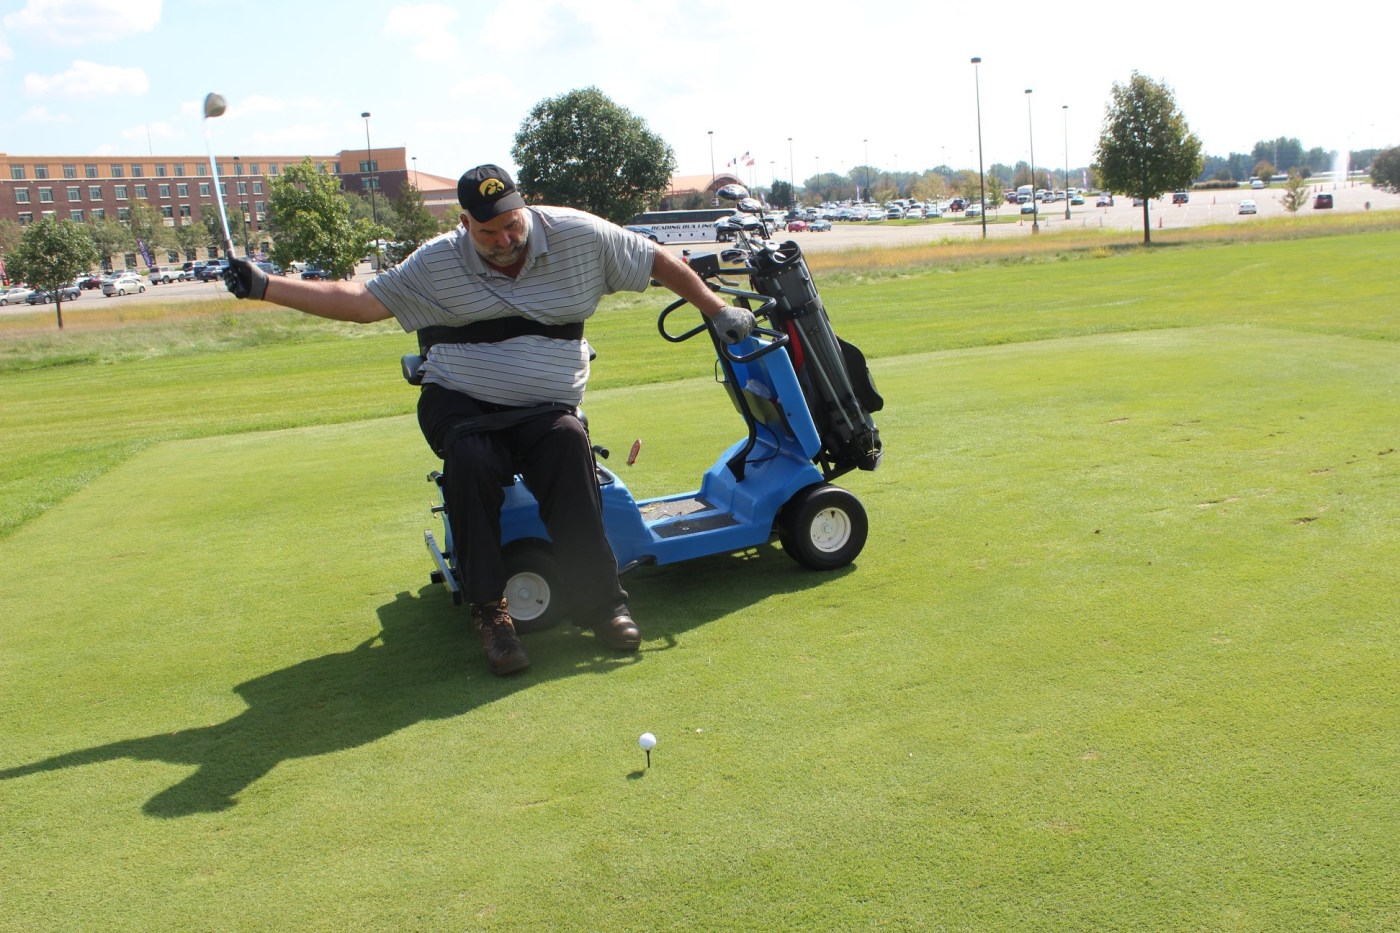 VA and DAV hosted an adaptive golf tournament.